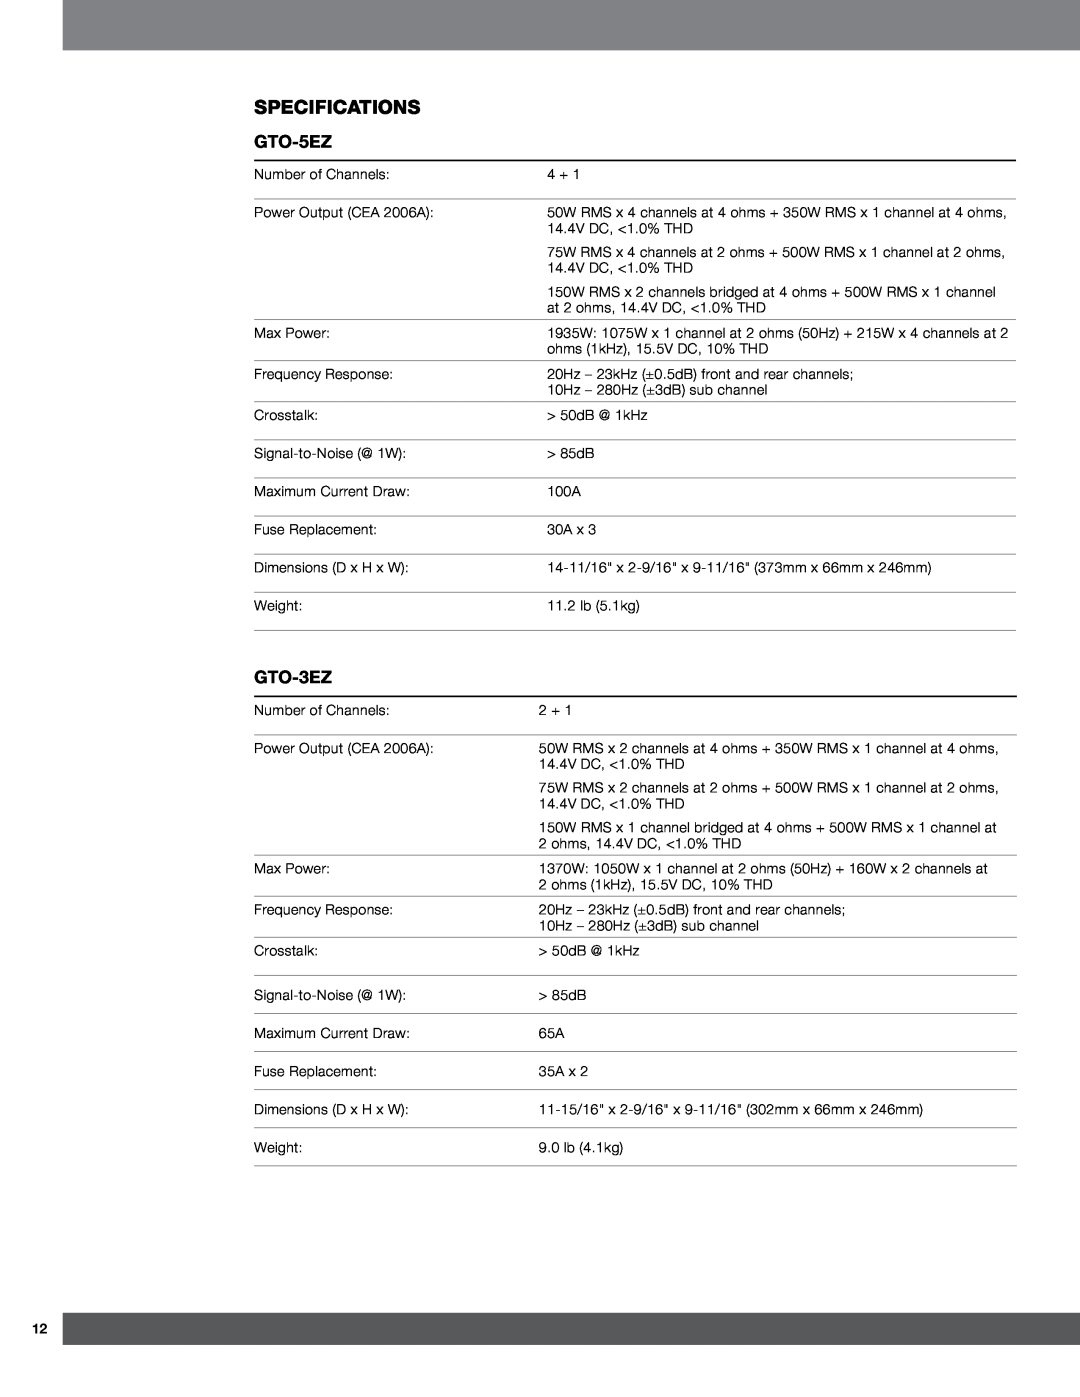 Harman GTO-3EZ, GTO-5EZ owner manual Specifications 